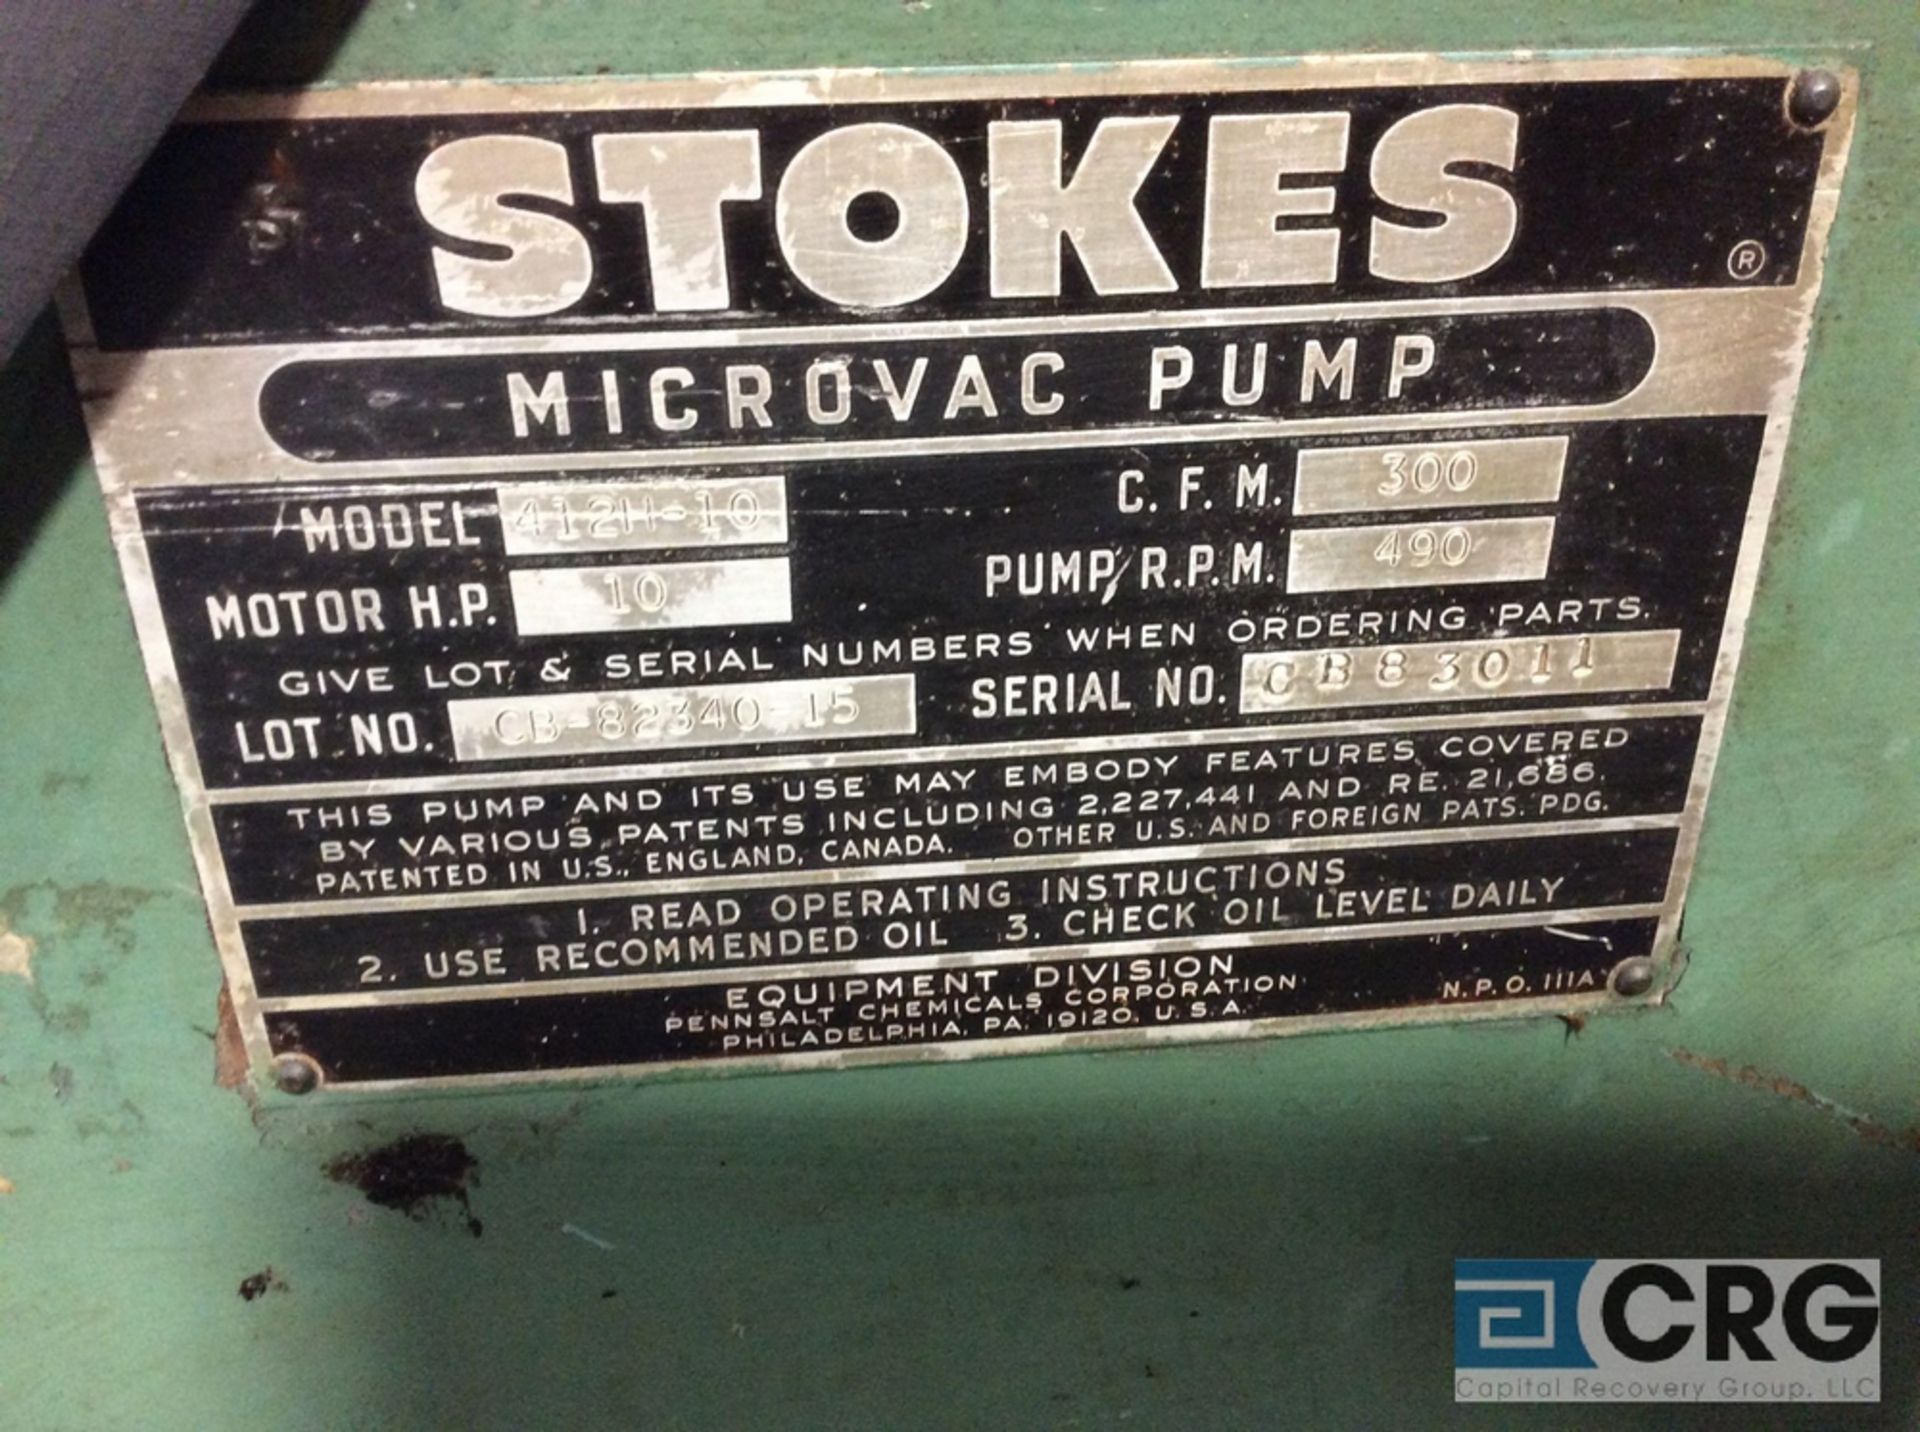 Stokes mcrovac pump, mn 412H-10, 10 hp motor, 300 CFM - Image 4 of 4